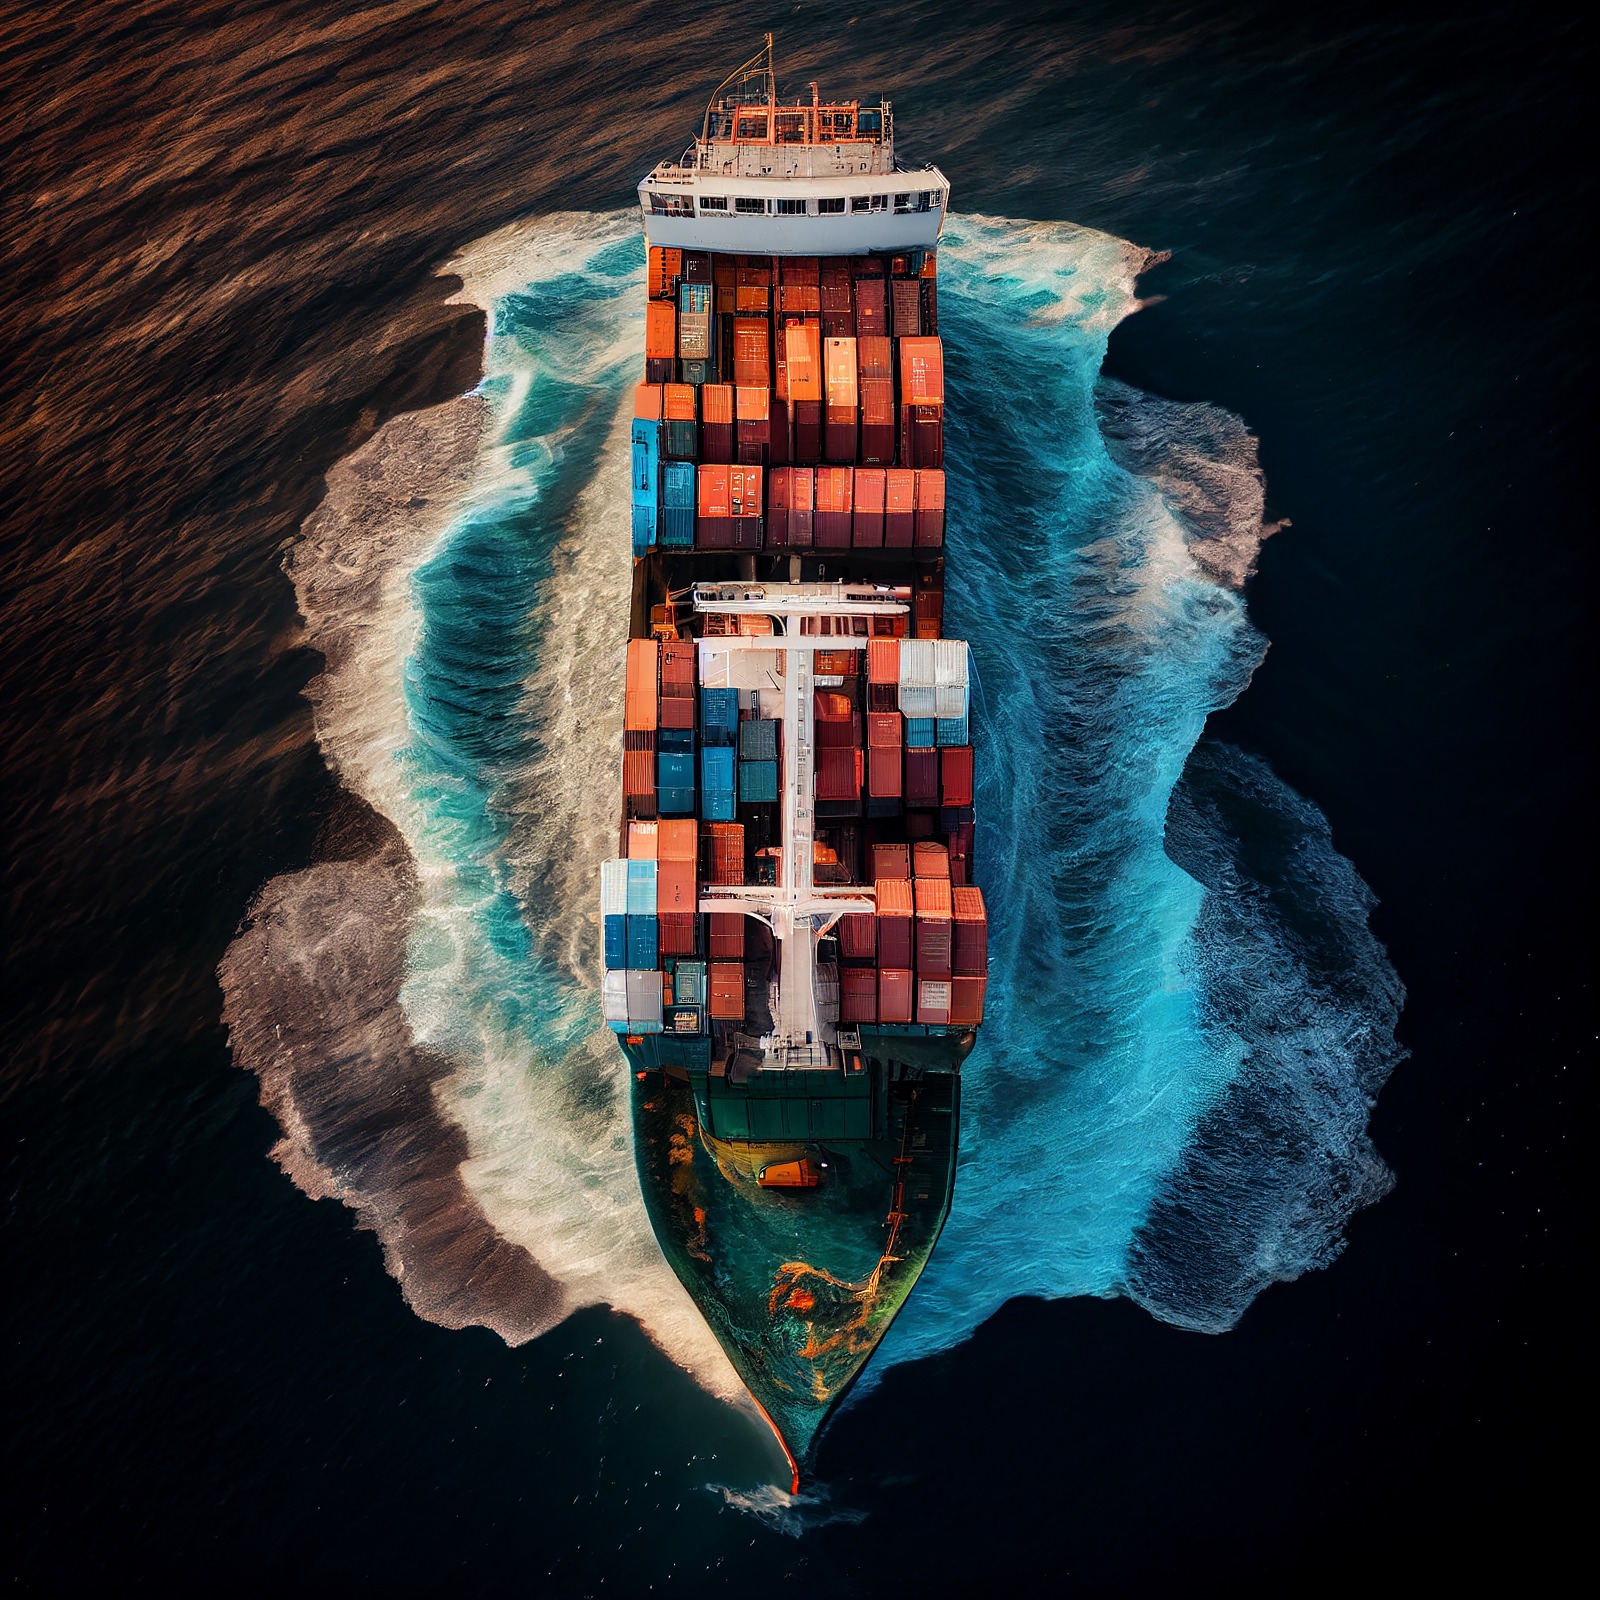 Ship Transport